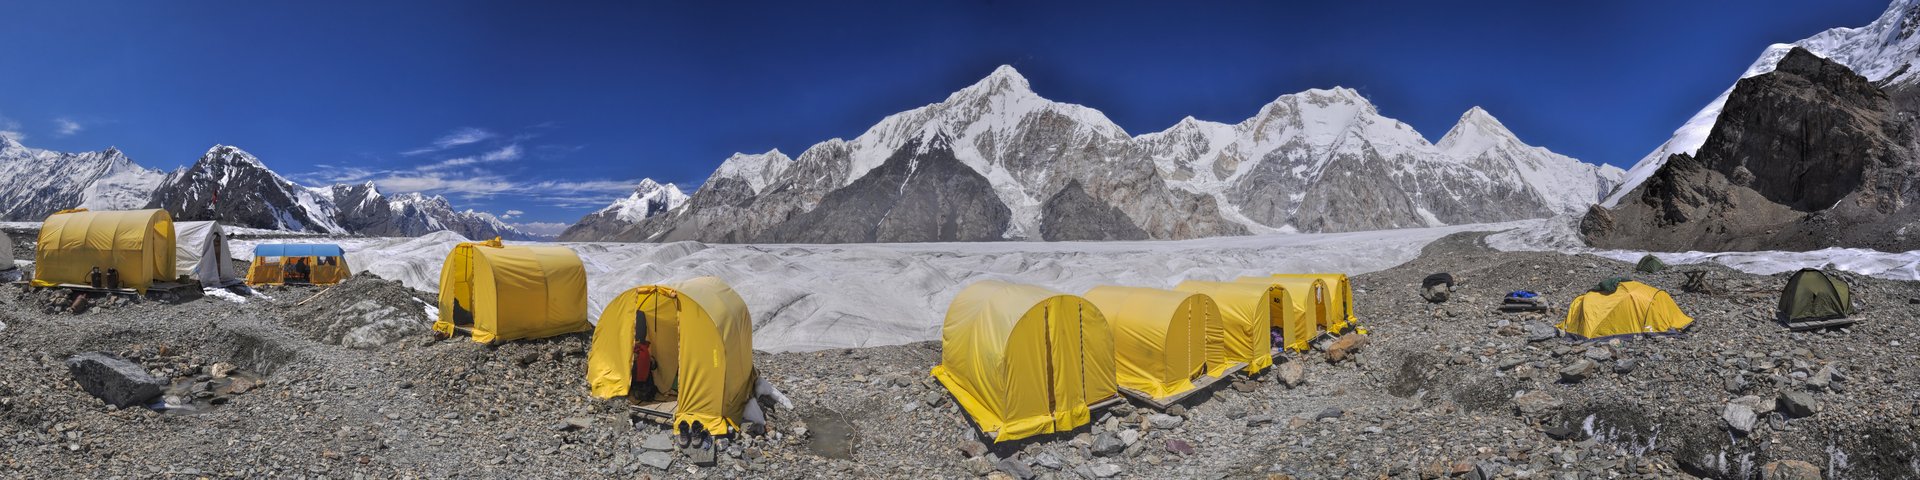 Base Camp am Inylcheck Gletscher in Kirgistan